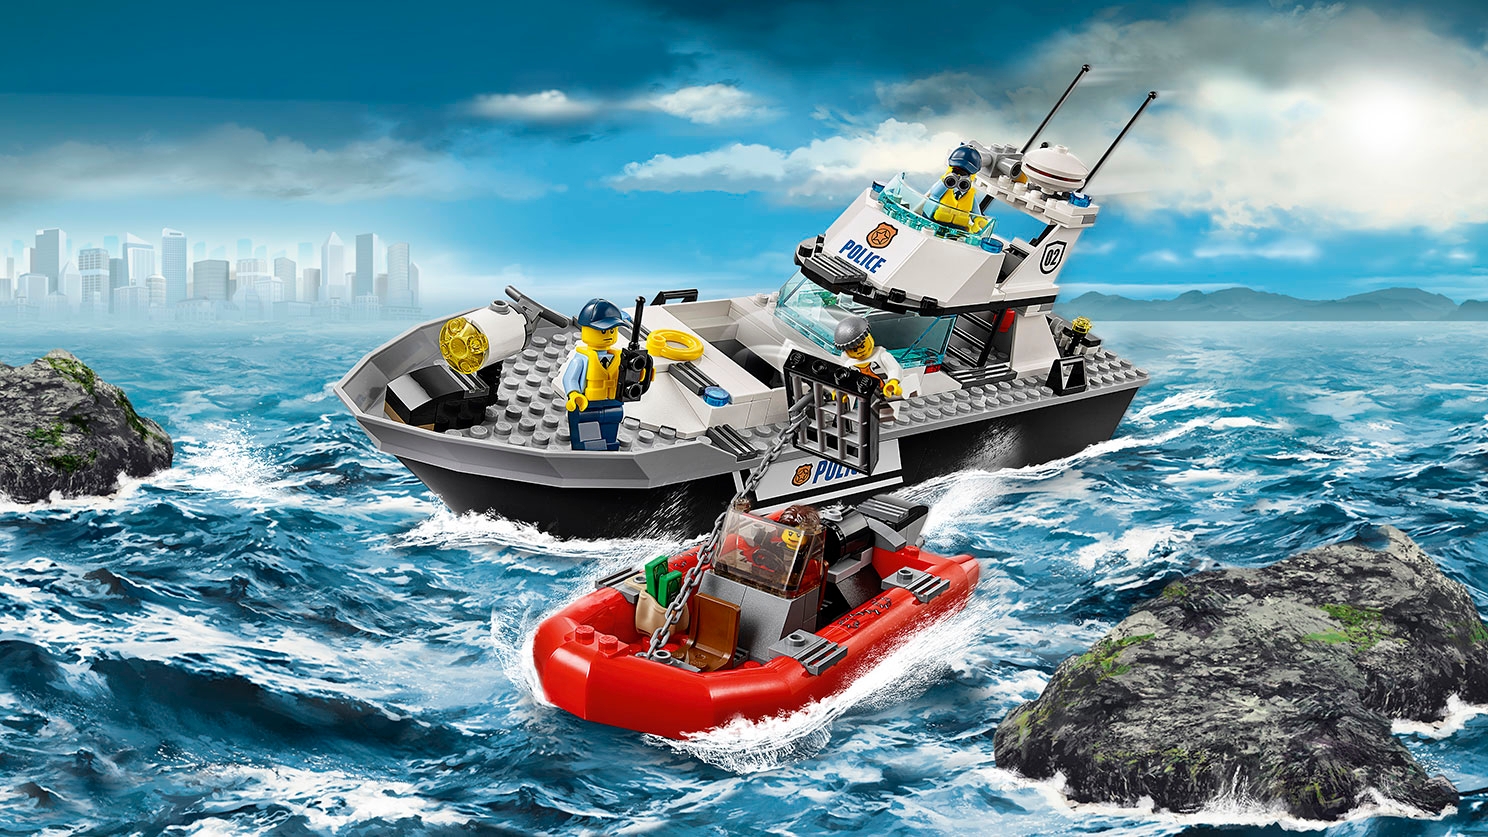 LEGO City Prison Island transport – Police Patrol Boat 60129